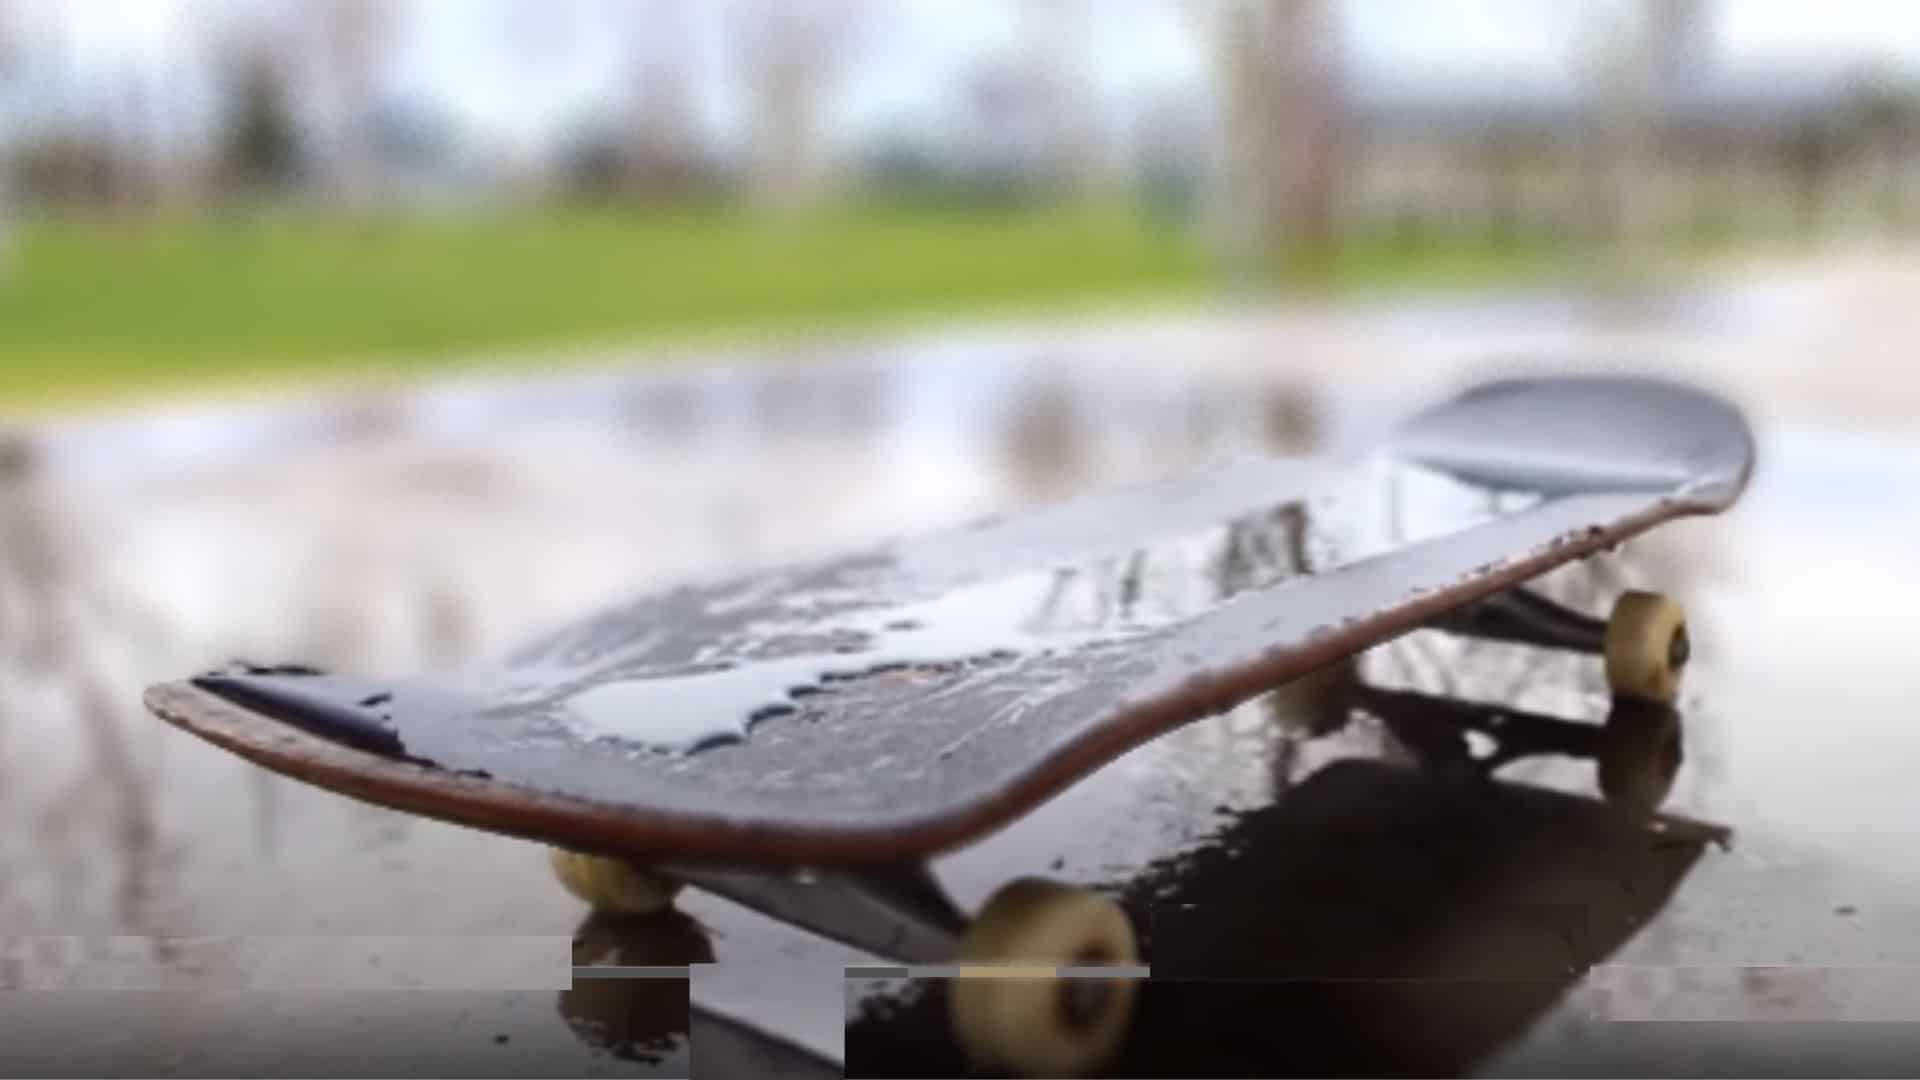 skateboard on the watery ground in rain